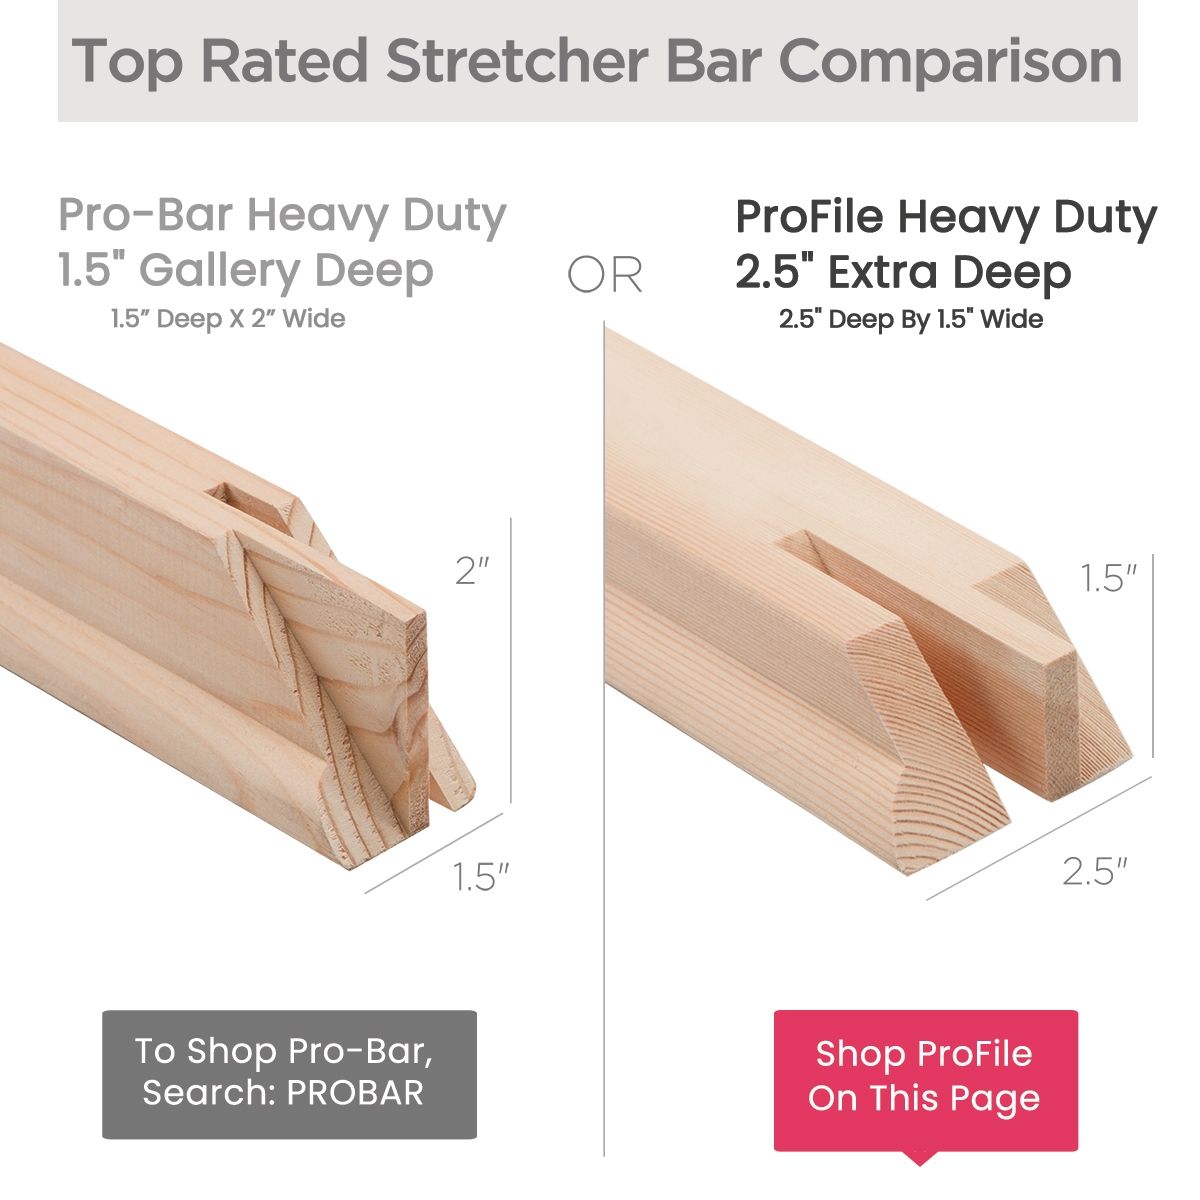 2.5" deep by 1.5" wide, ProFile Heavy Duty Stretcher Bar